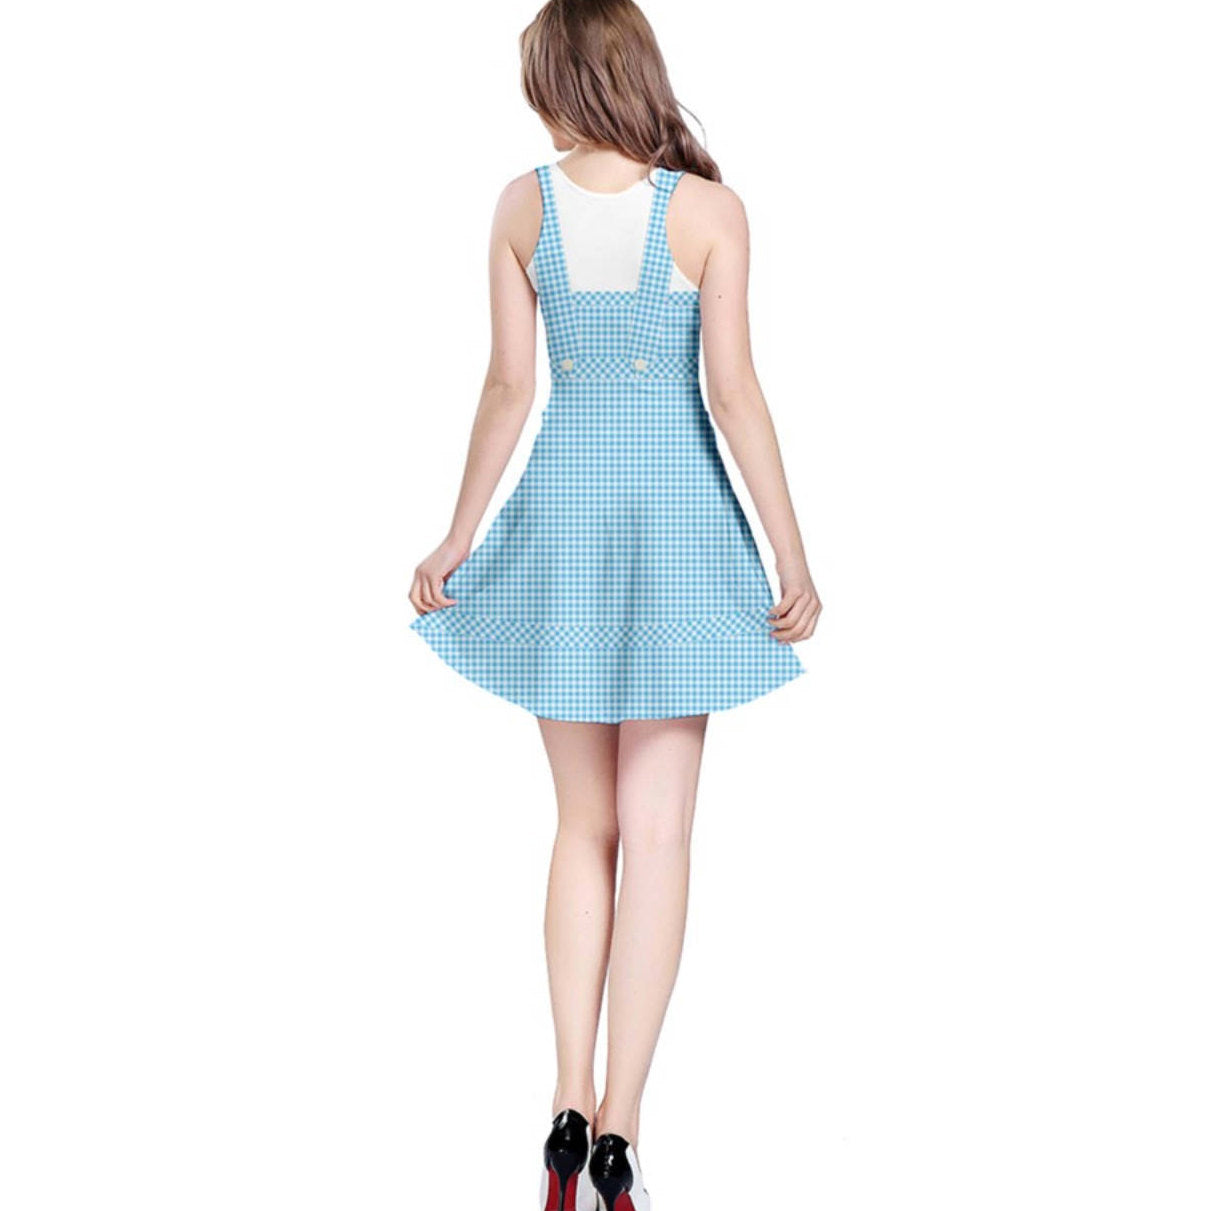 Dorothy Wizard of Oz Inspired Sleeveless Dress